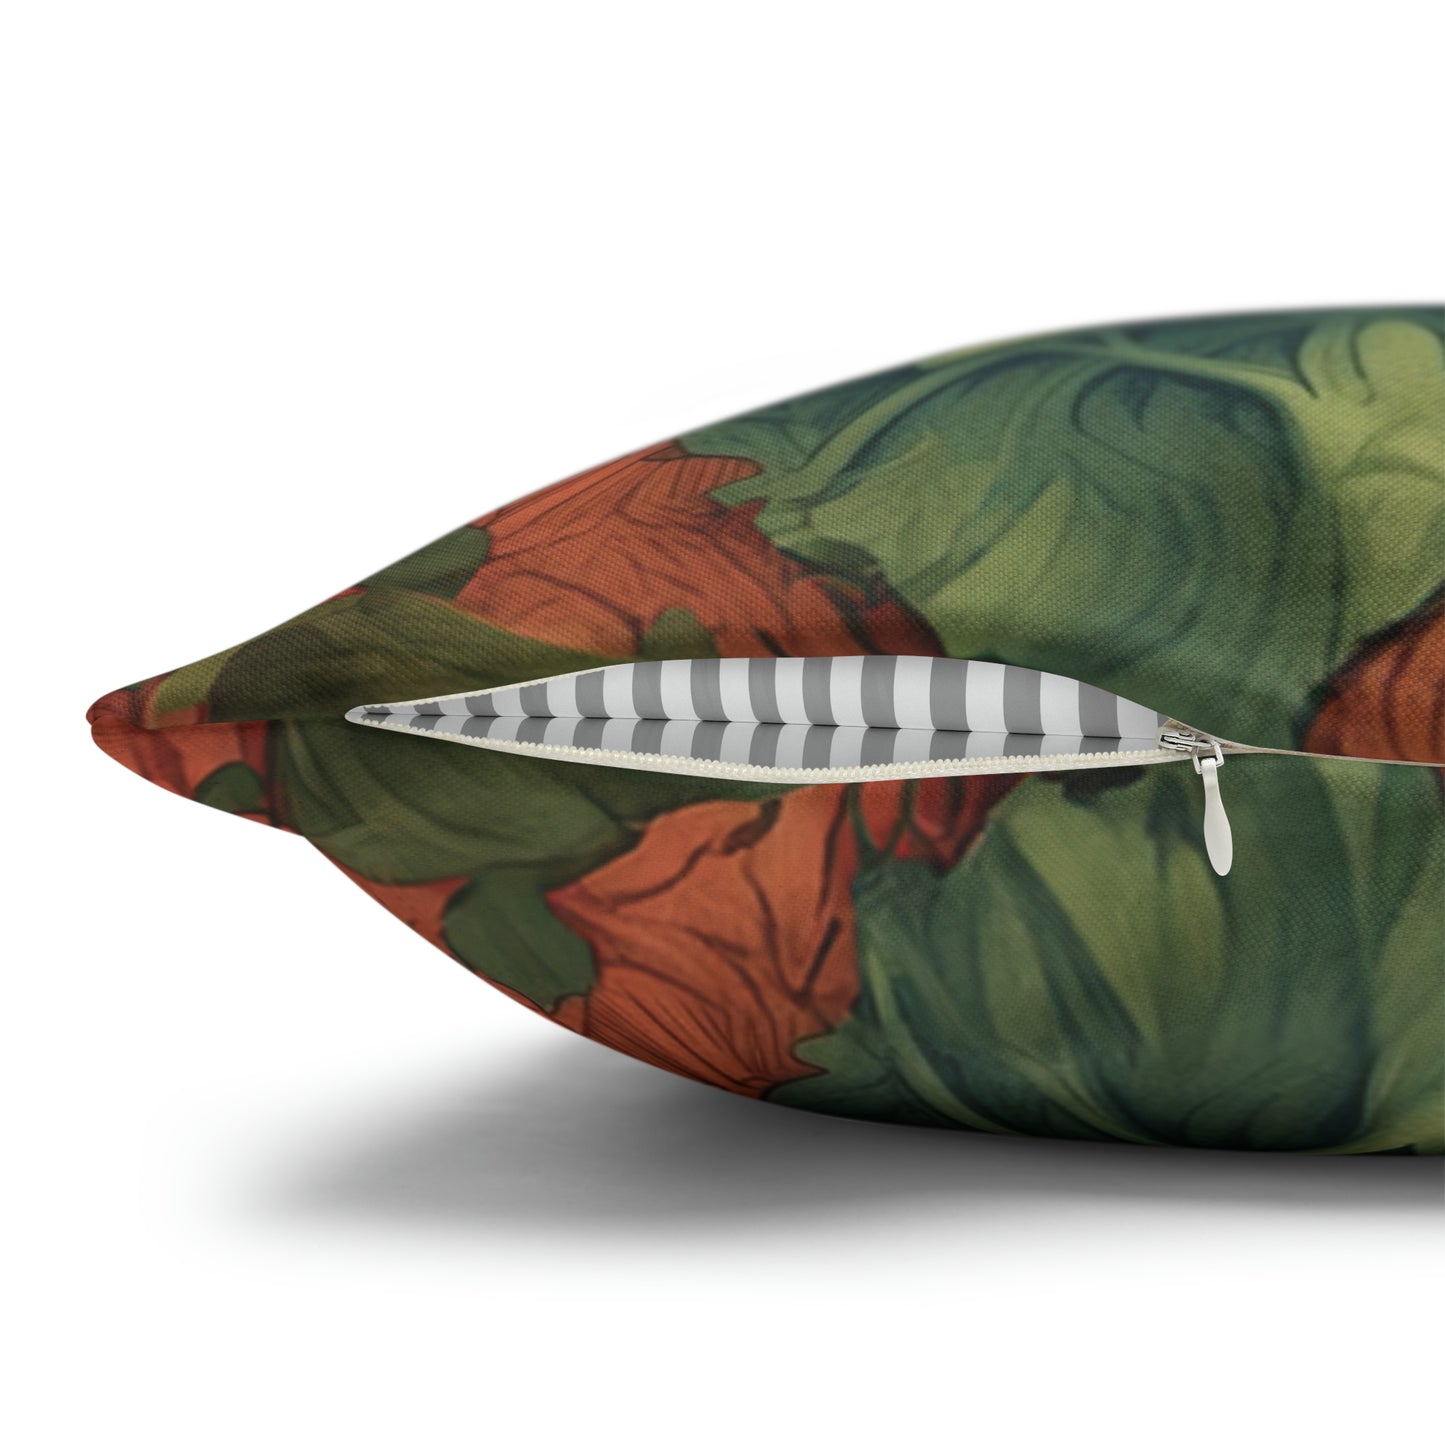 William Morris Inspired Love Birds in Garden Pillow and Case